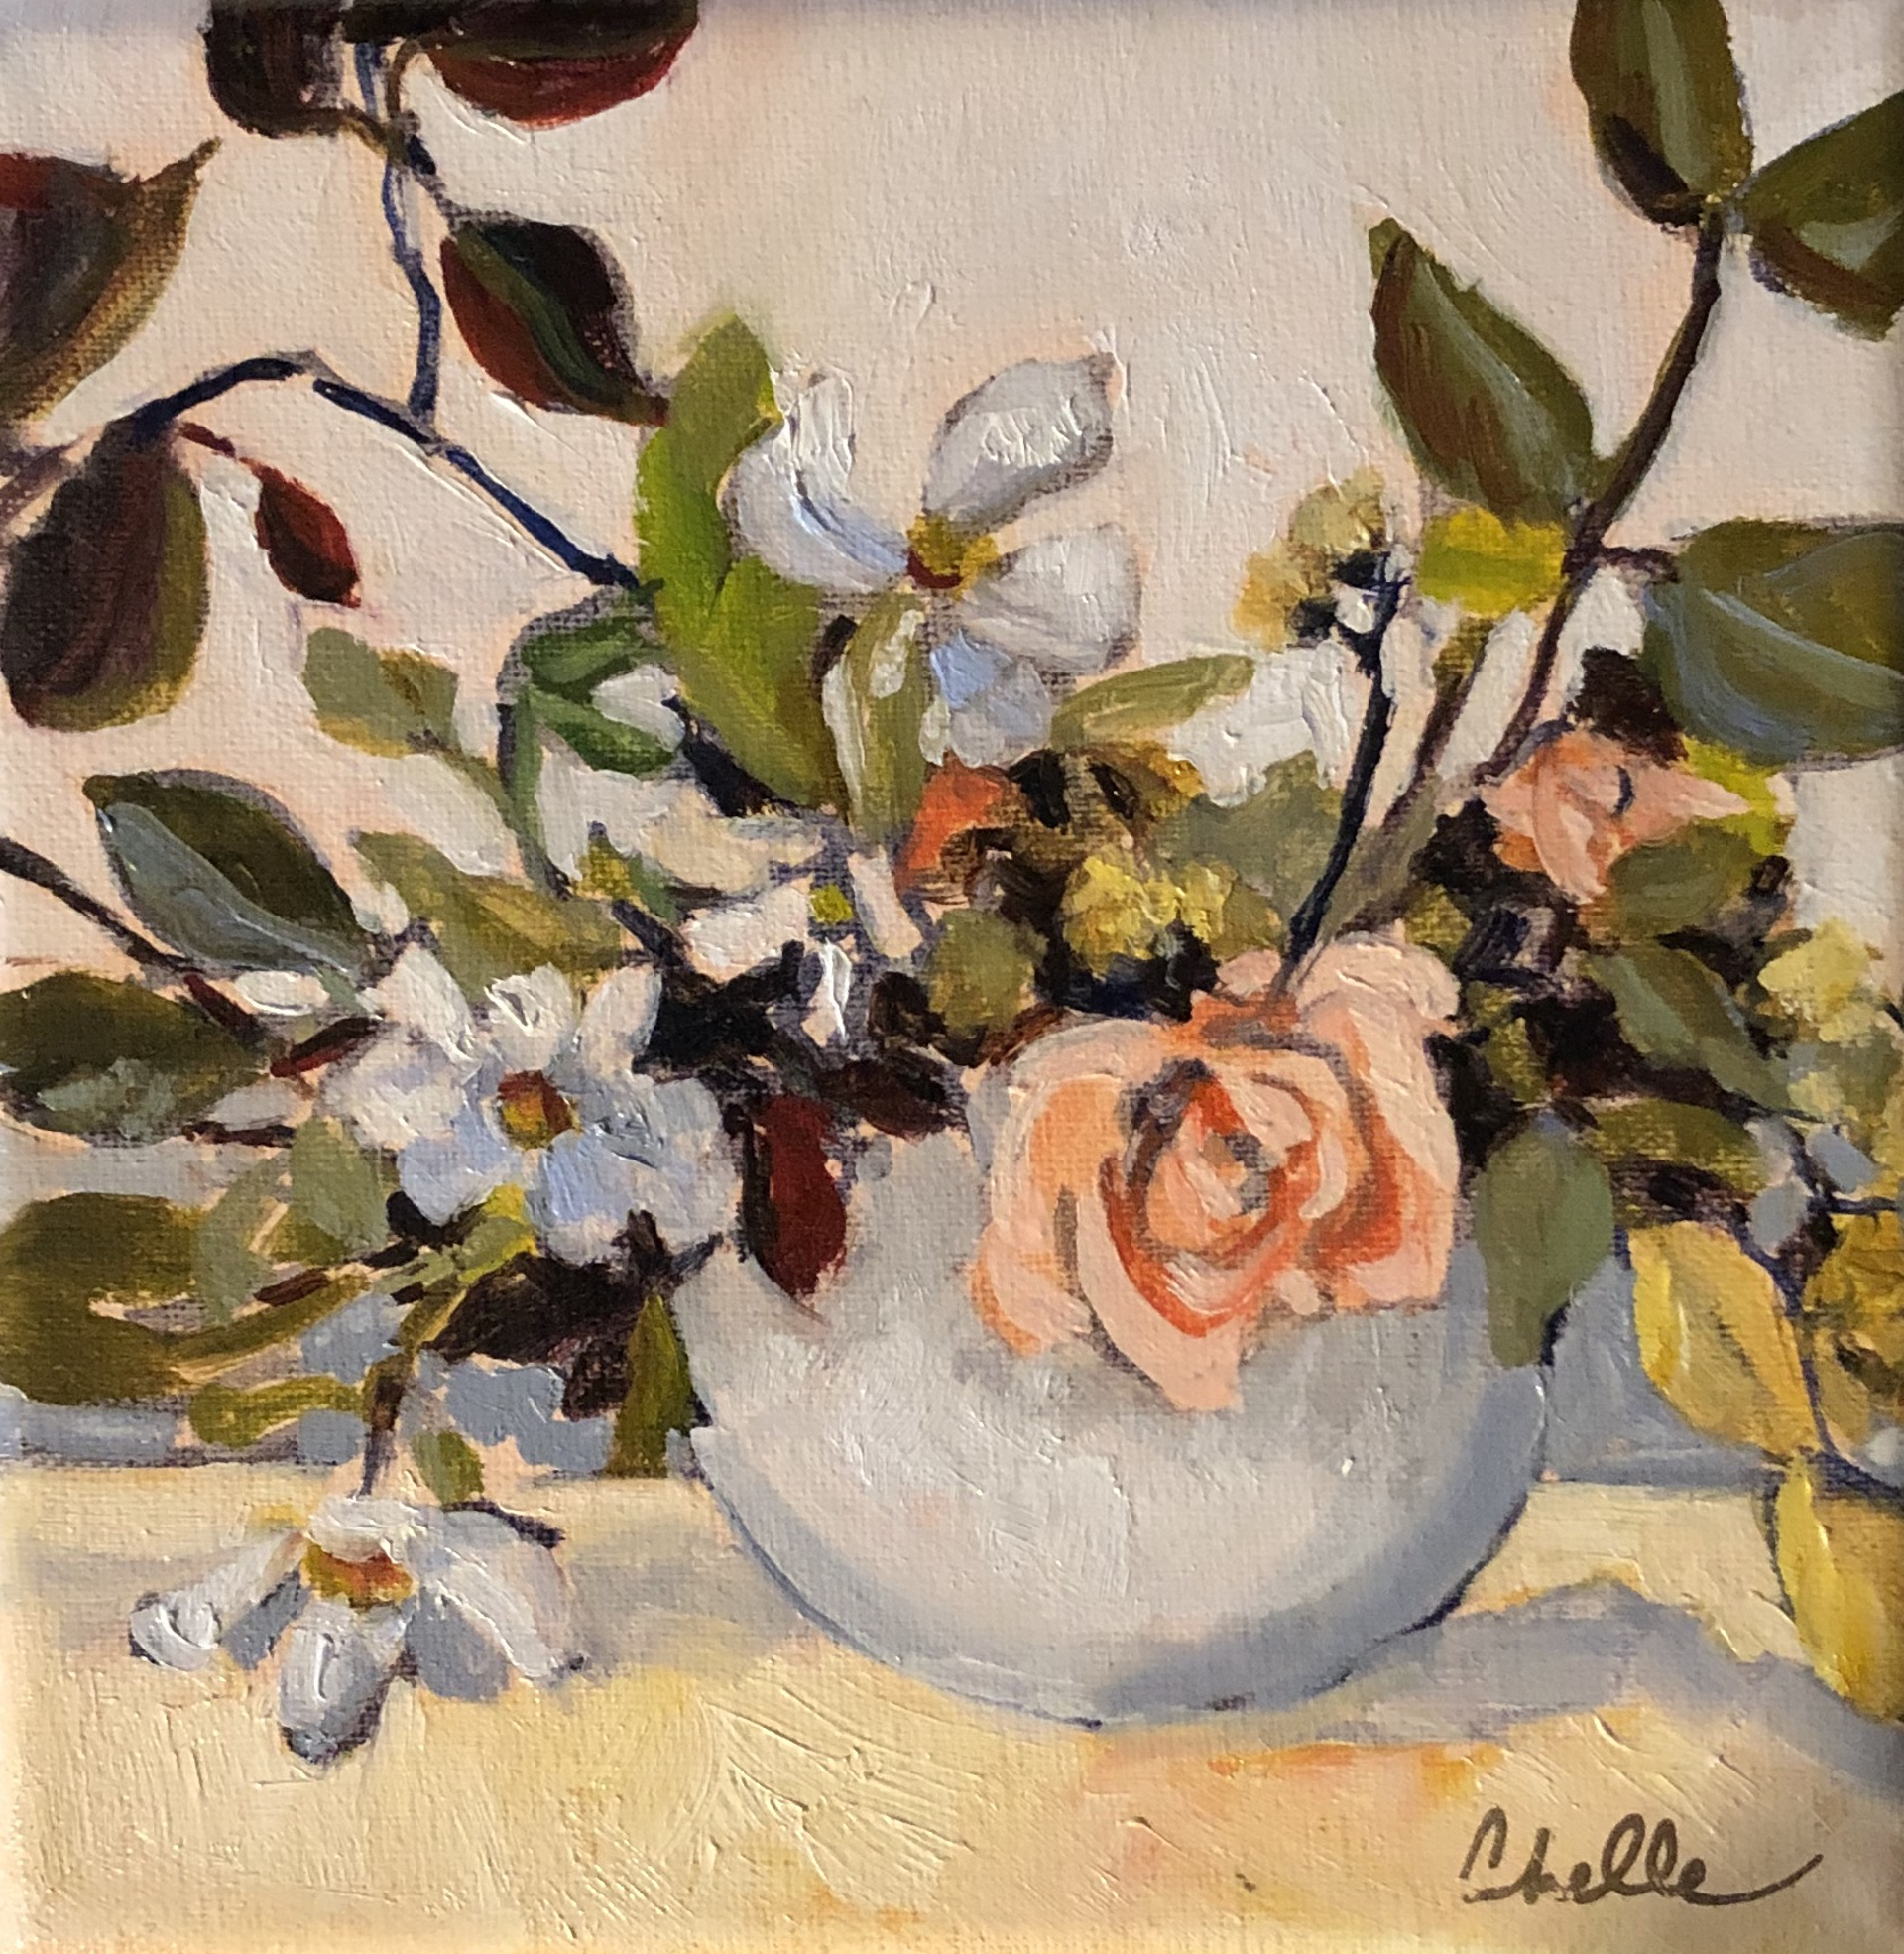 Little Peach by Chelle Gunderson